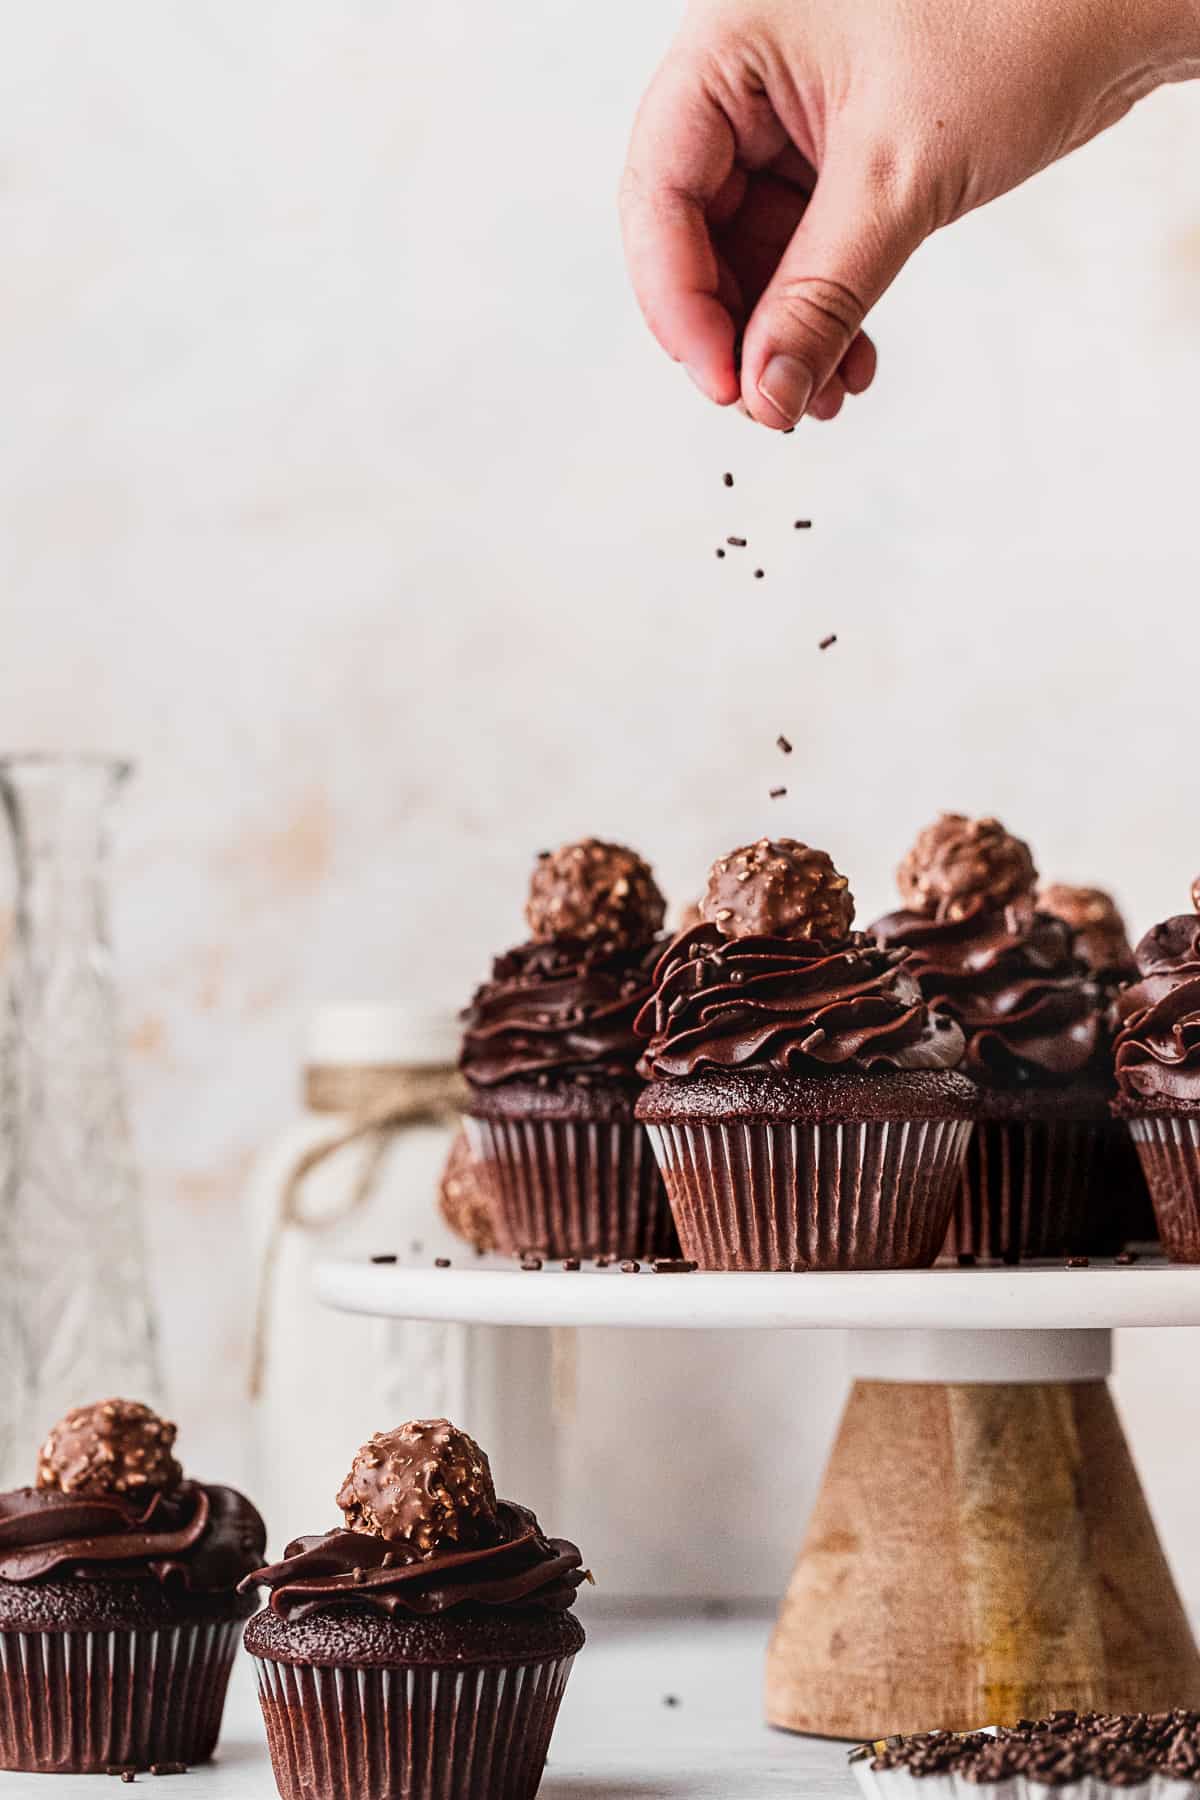 Sprinkling chocolate sprinkles on top of chocolate fudge cupcakes.